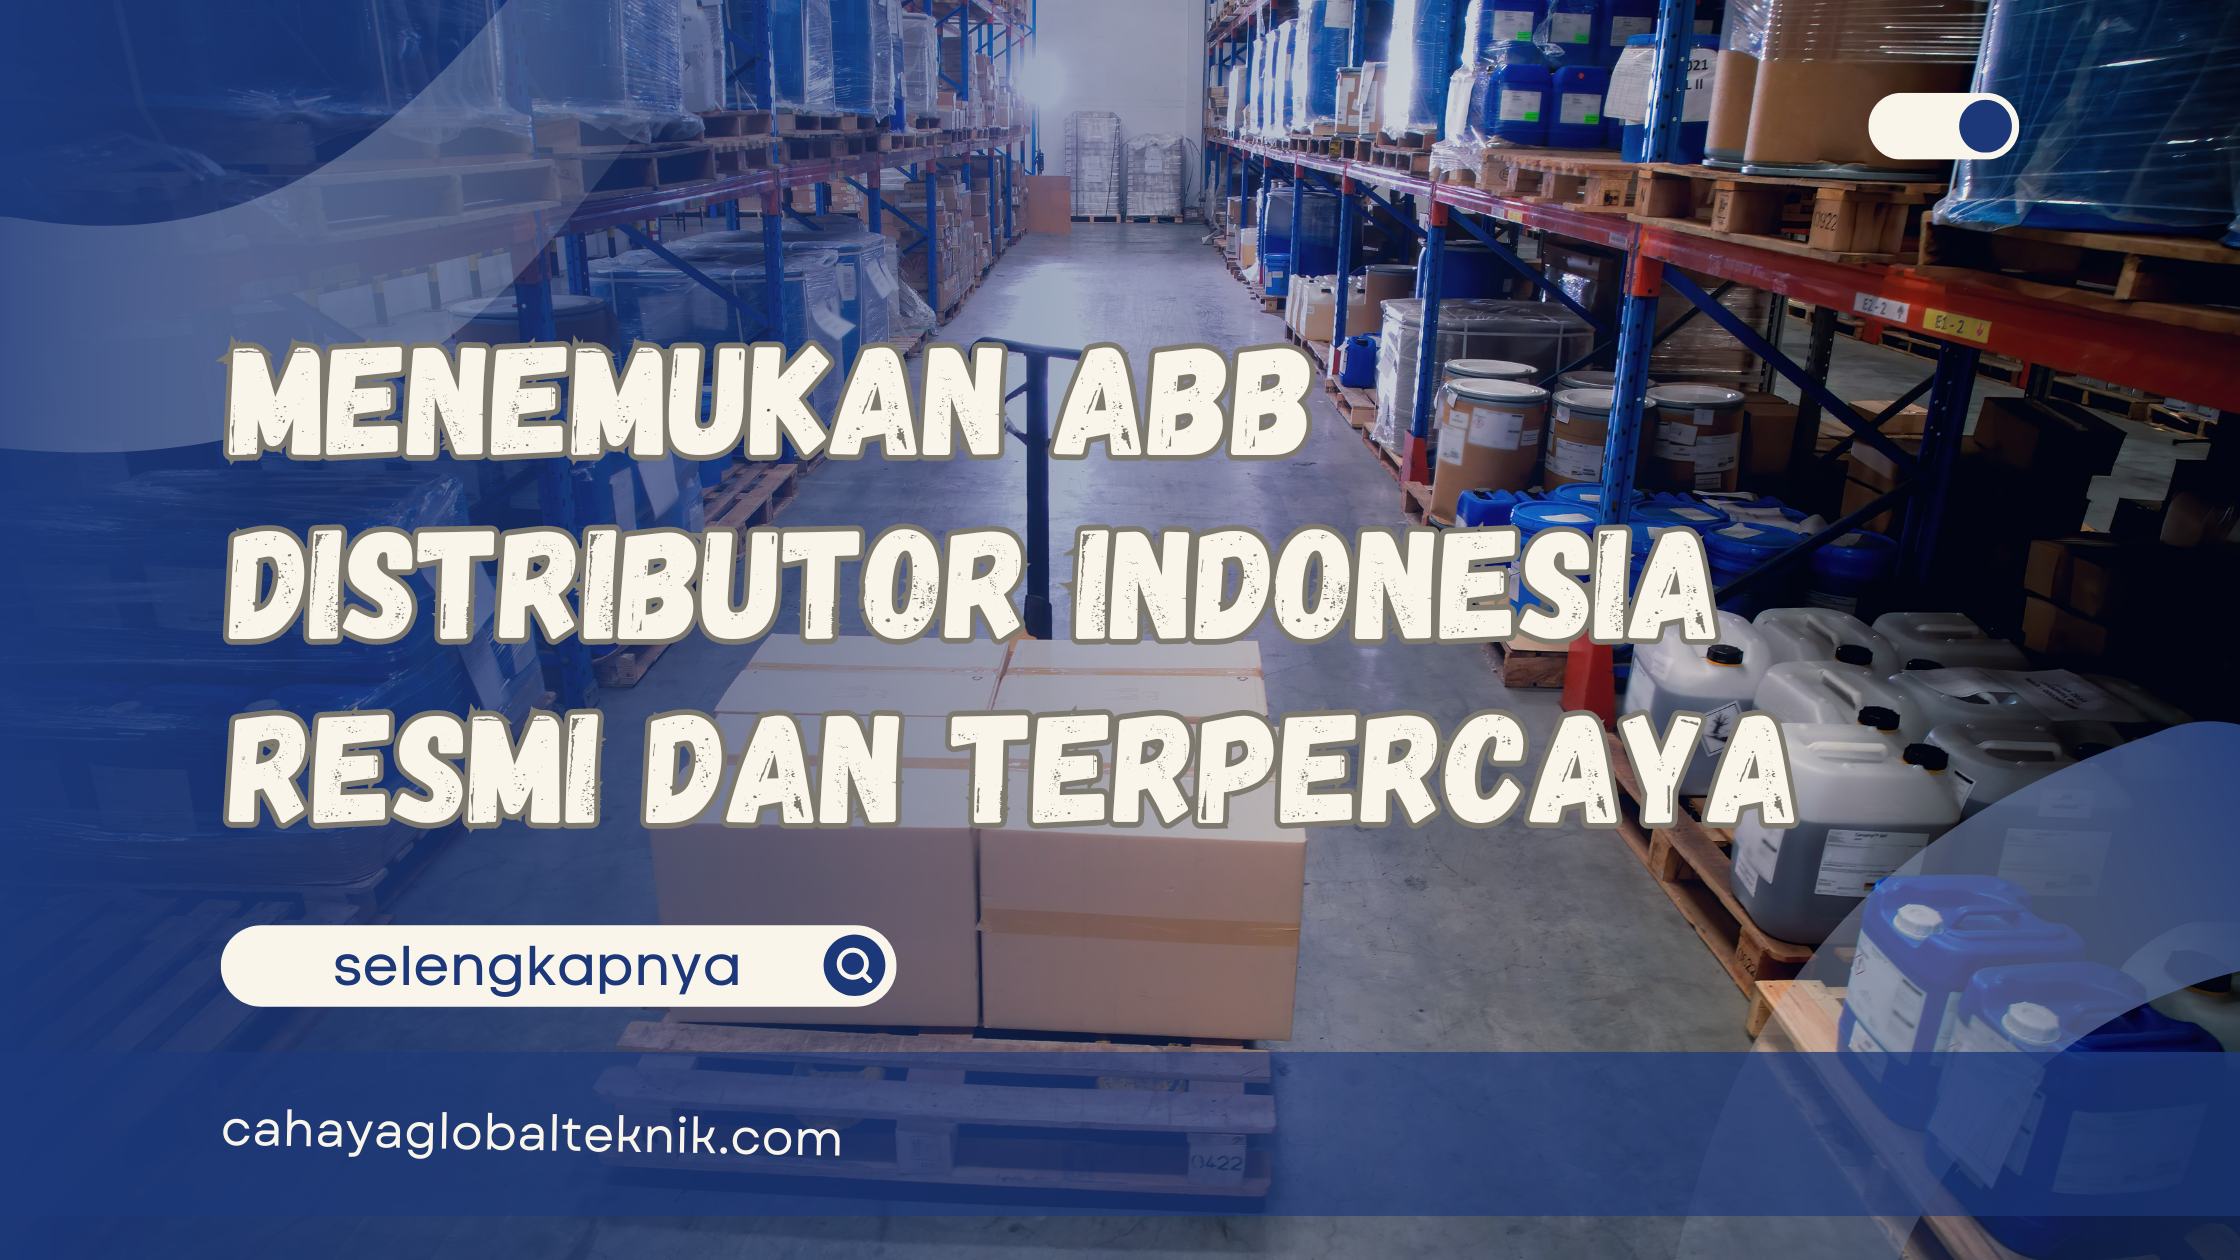 ABB distributor Indonesia resmi